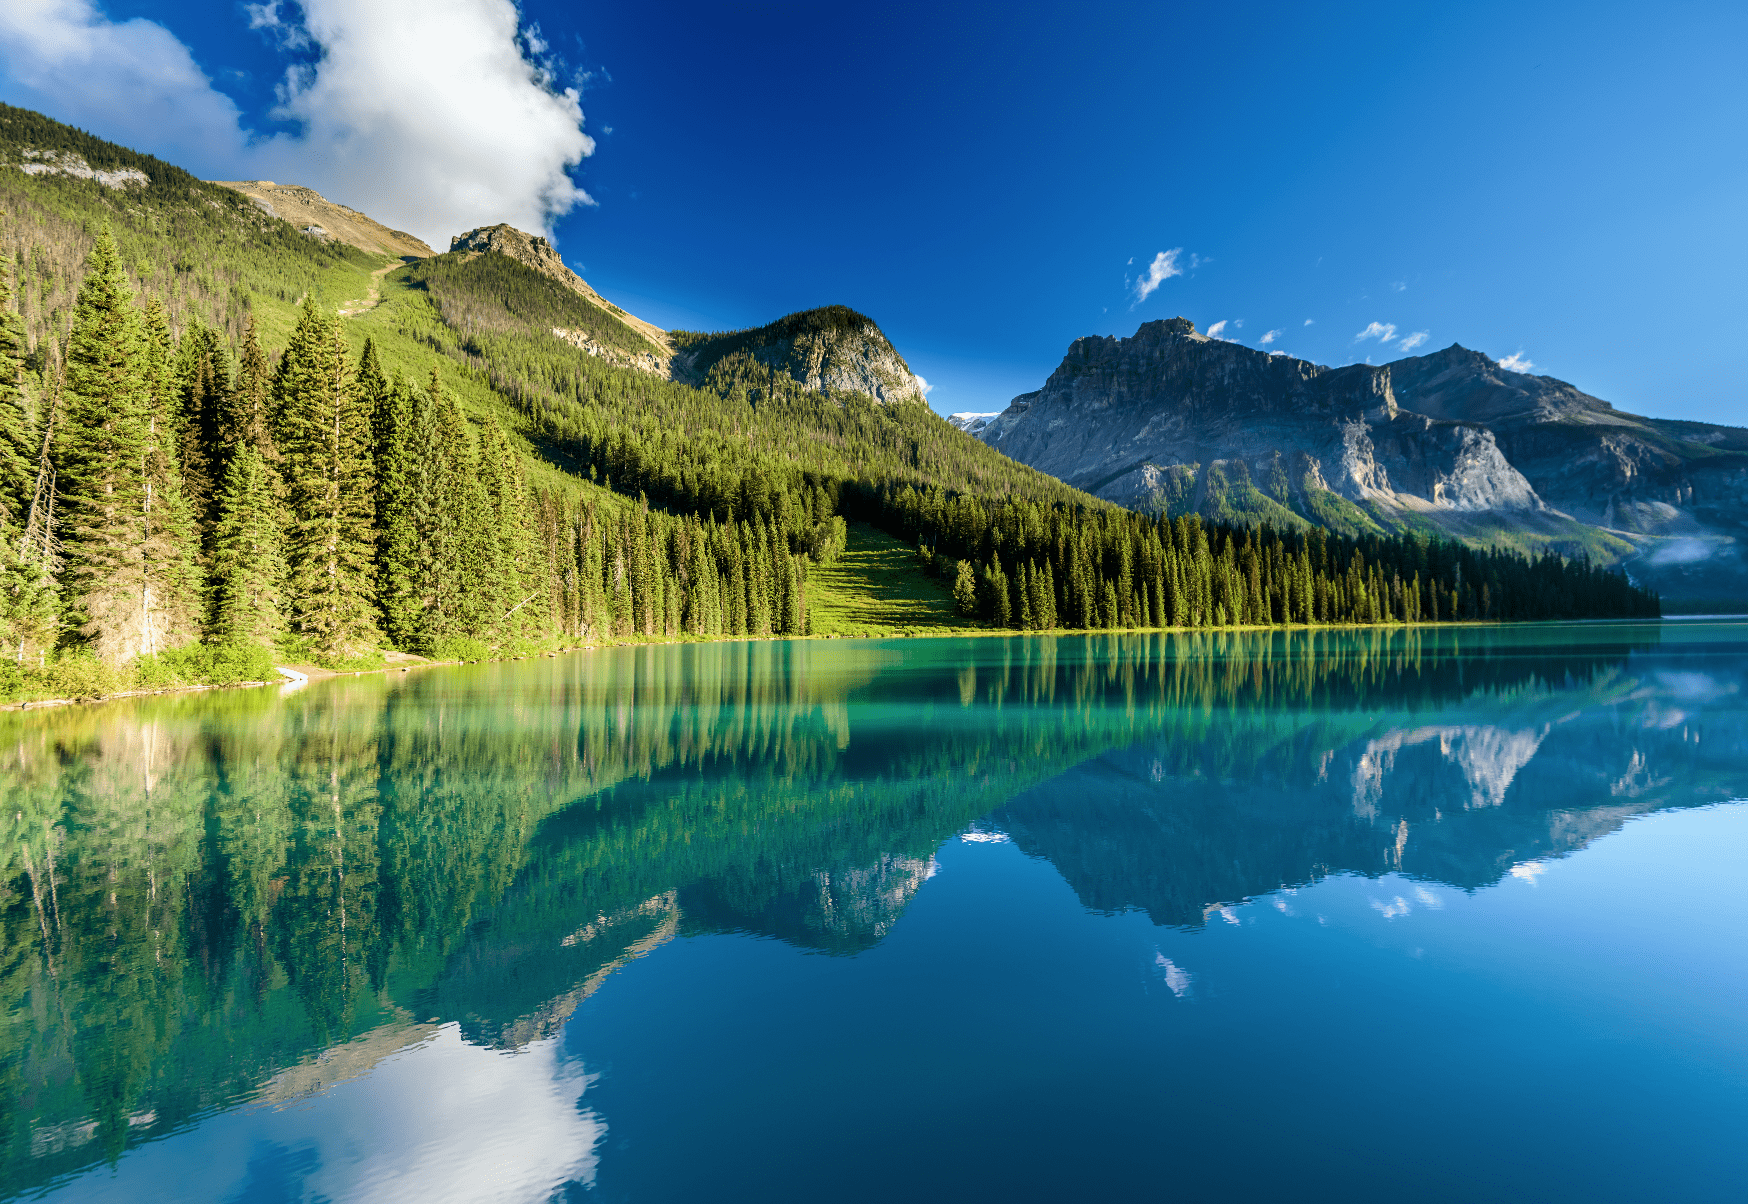 a landscape of a mountain next to a lake